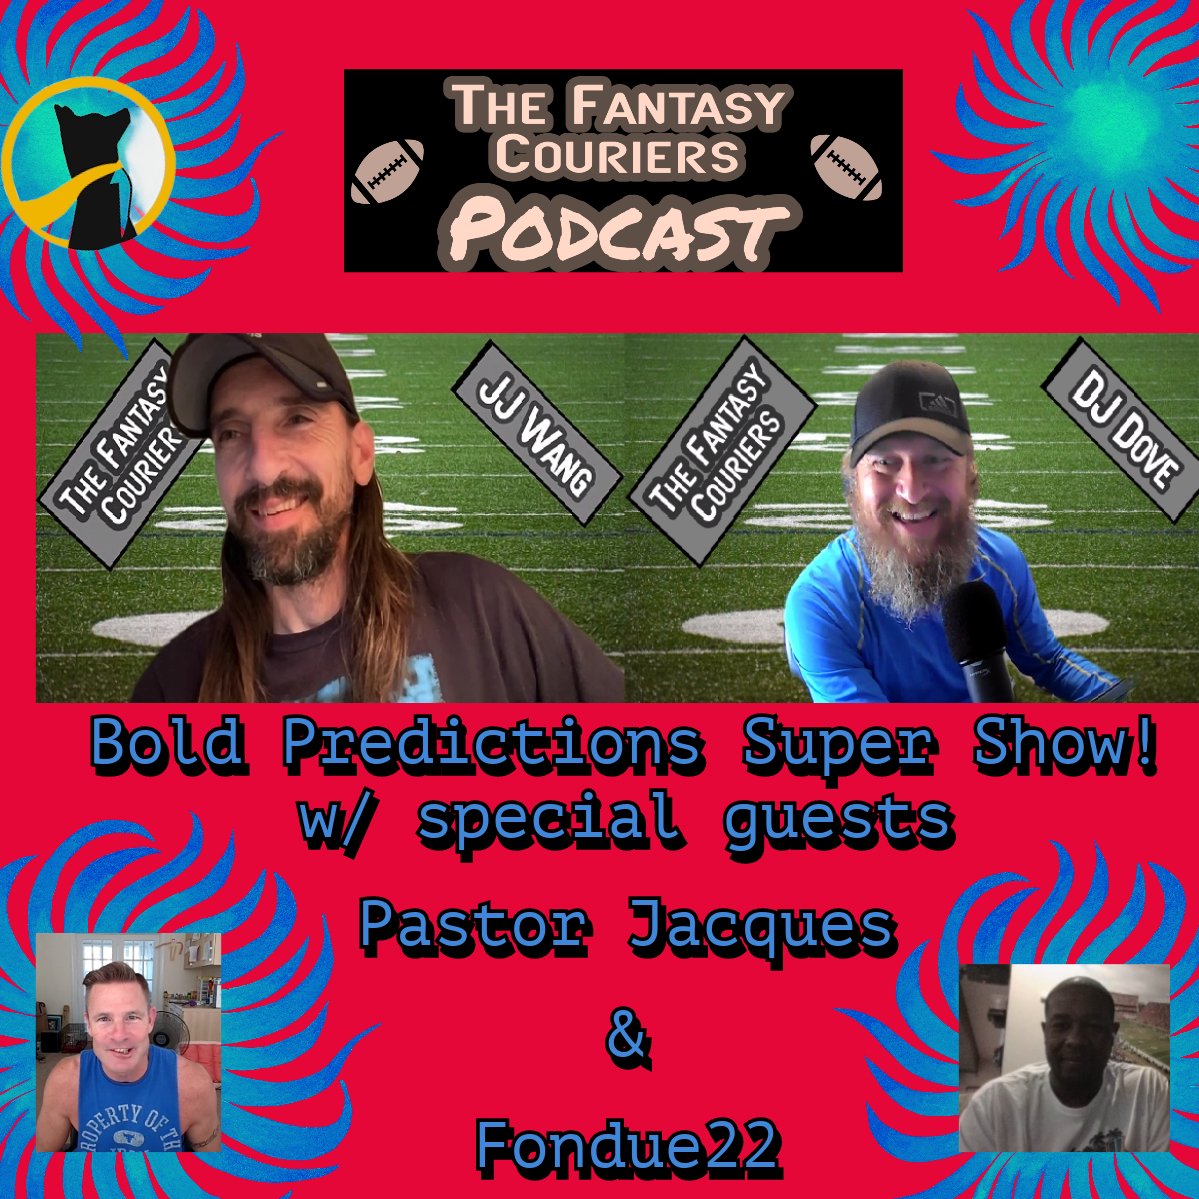 NEW EPISODE!!

thefantasycouriers.wixsite.com/website

youtube.com/channel/UCenPo…

#spotify #IHeartRadio #TuneInpodcasts #AmazonPodcasts #applepodcasts #pandorapodcasts #youtubemusic #Fantasyfootball  #podcast #nfl #Underdogfantasy #fantasyfootballadvice  #fantasy #footballseason #boldpredictions